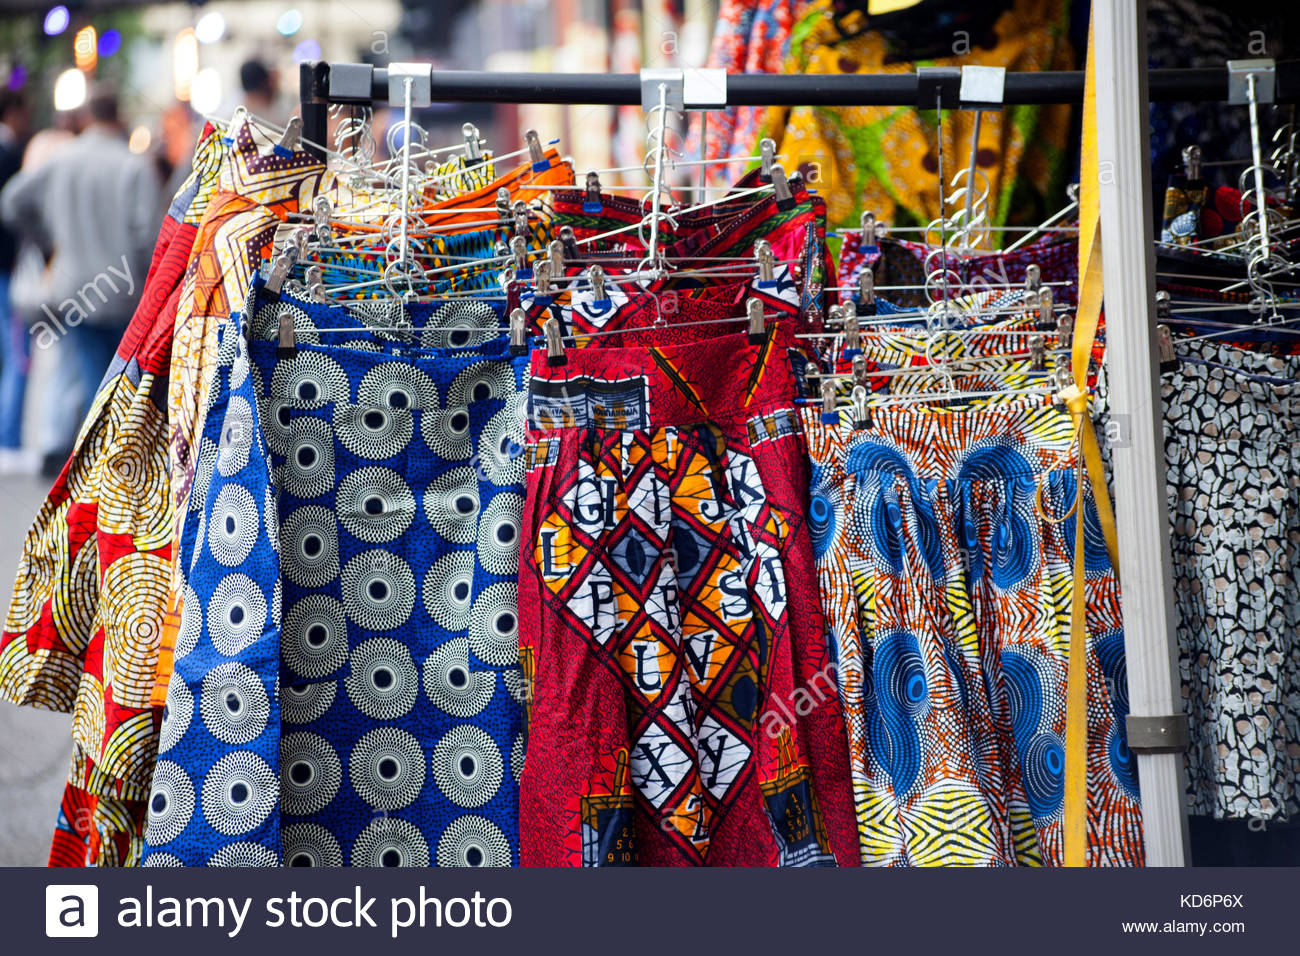 African Fabric Stock Photos & African Fabric Stock Images - Alamy